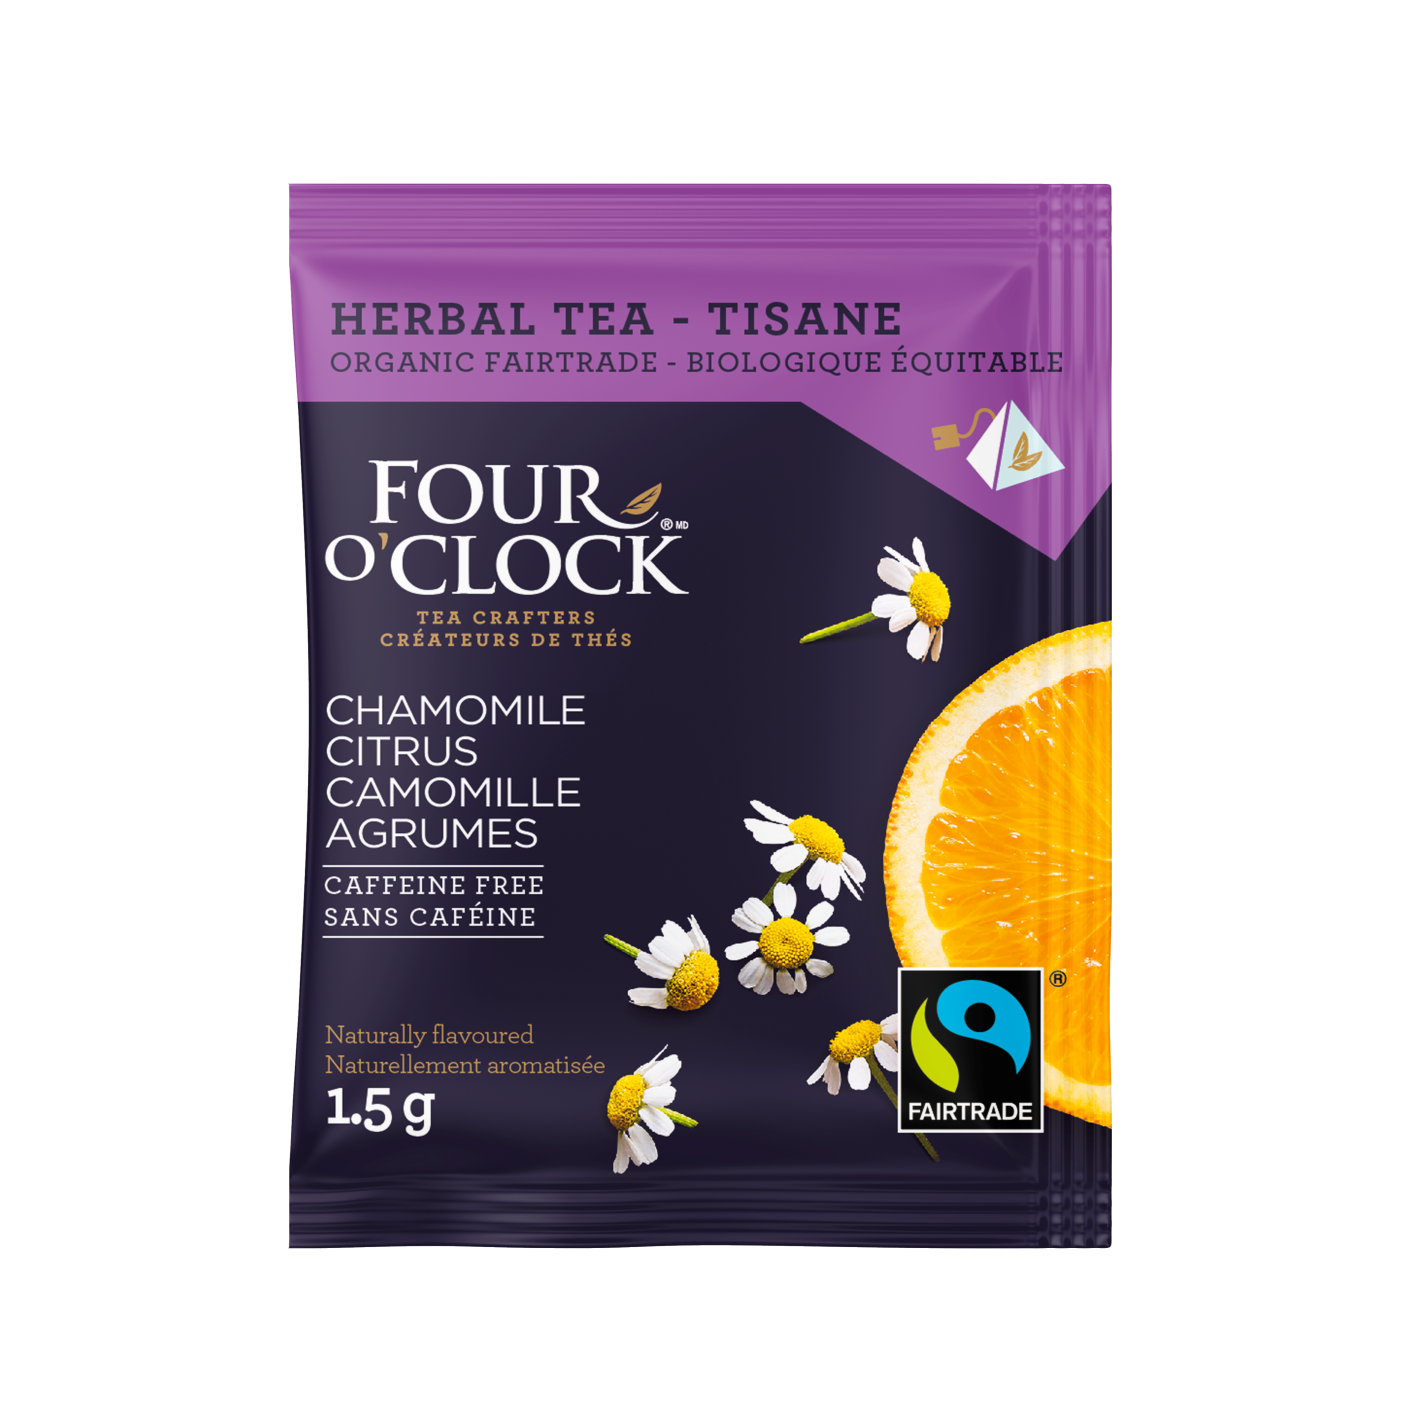 Chamomile Citrus Organic Fairtrade Herbal Tea